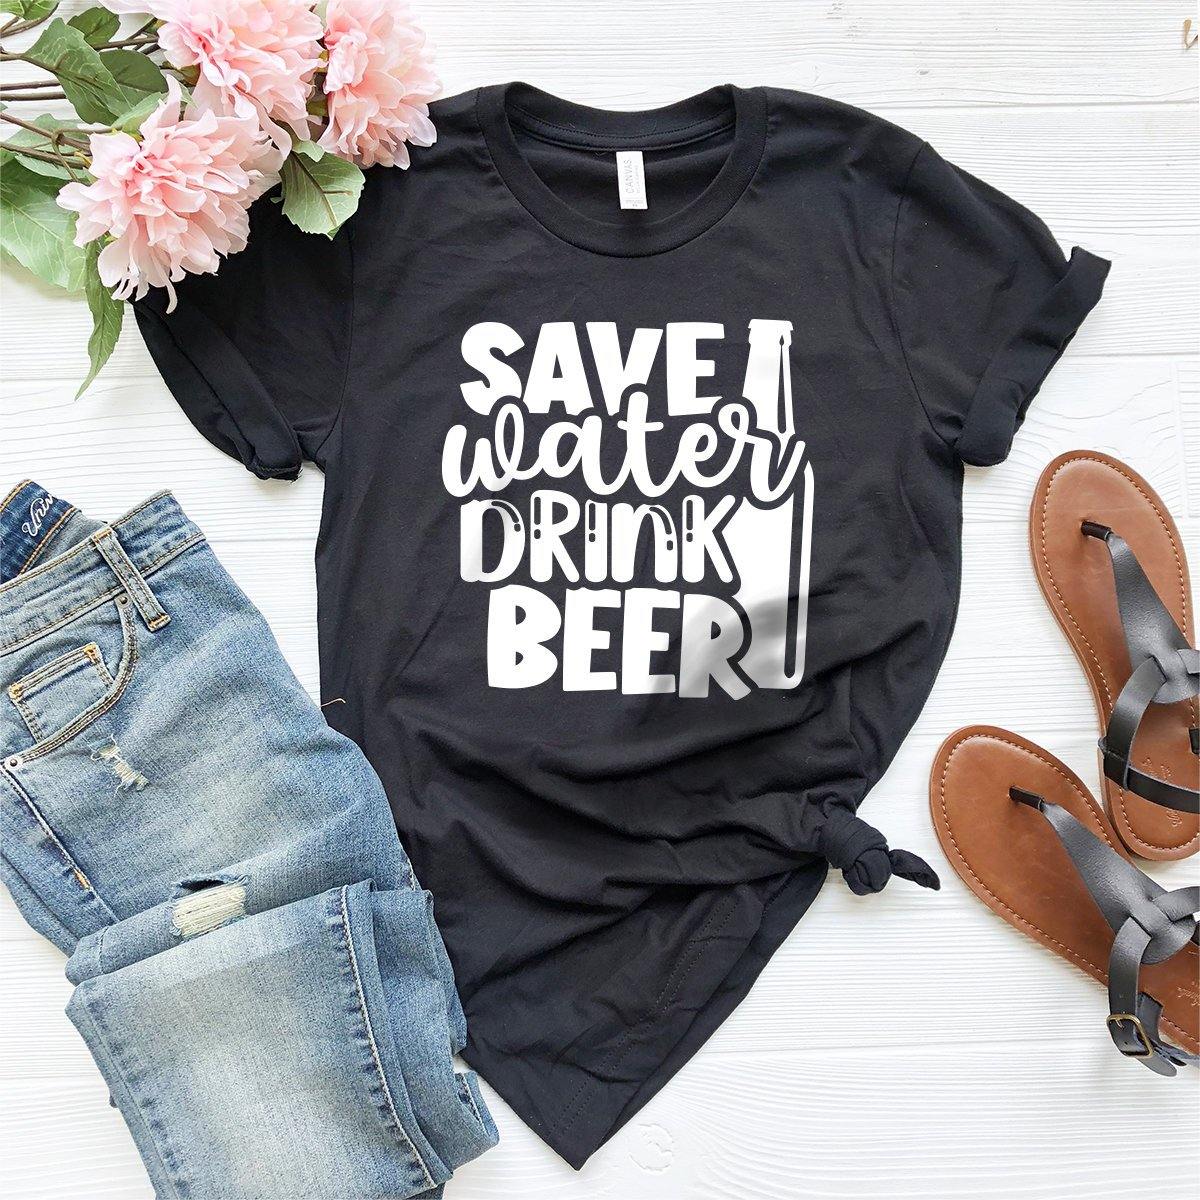 Save Water Drink Beer T-Shirt, Beer Lover Shirt, Funny Beer Shirt, Alcoholic Shirt, Funny Party Shirt, Drinking Party Shirt, Beer Tshirt - Fastdeliverytees.com